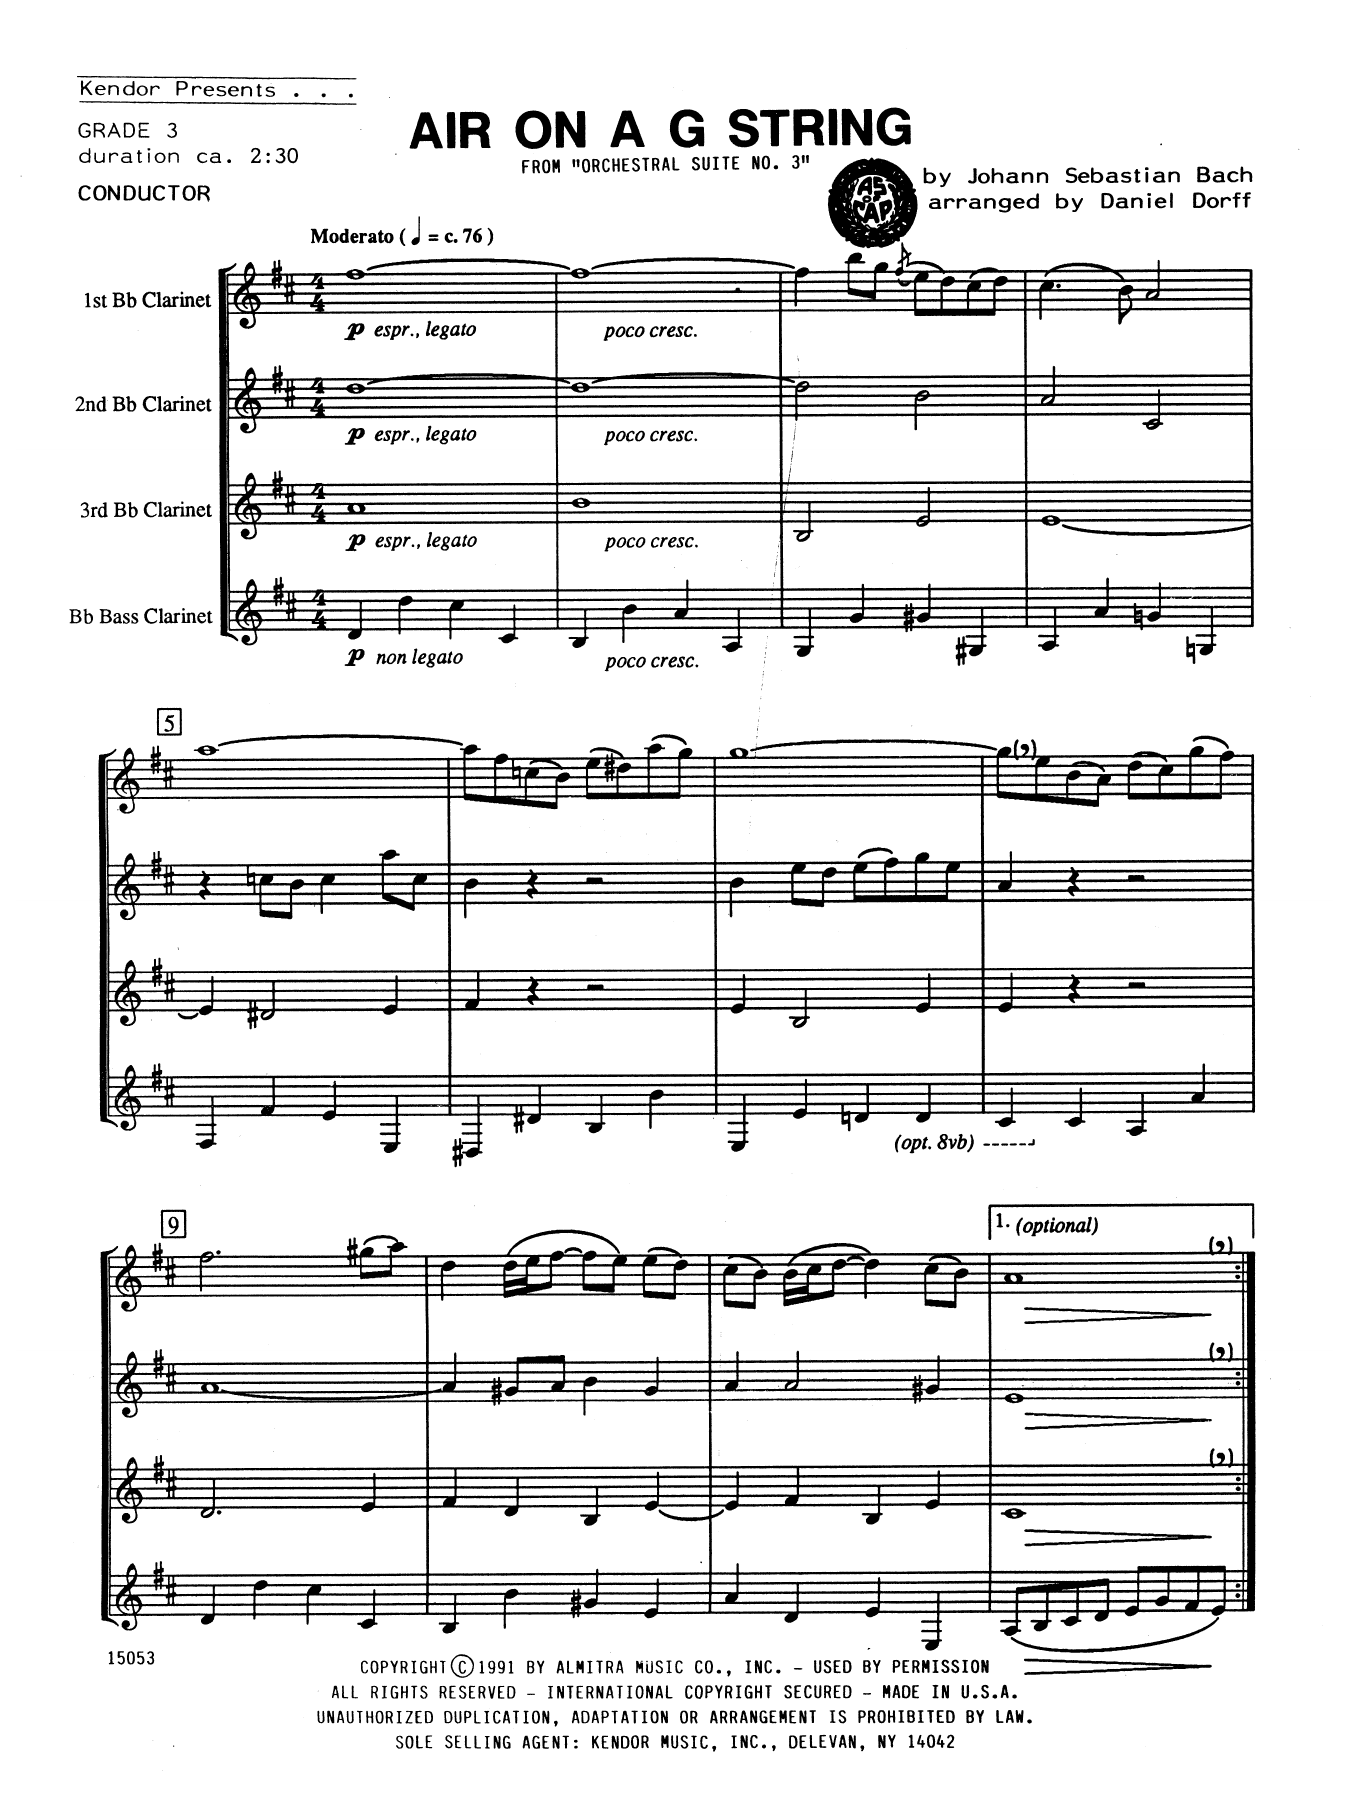 Download Daniel Dorff Air On A G String - Full Score Sheet Music